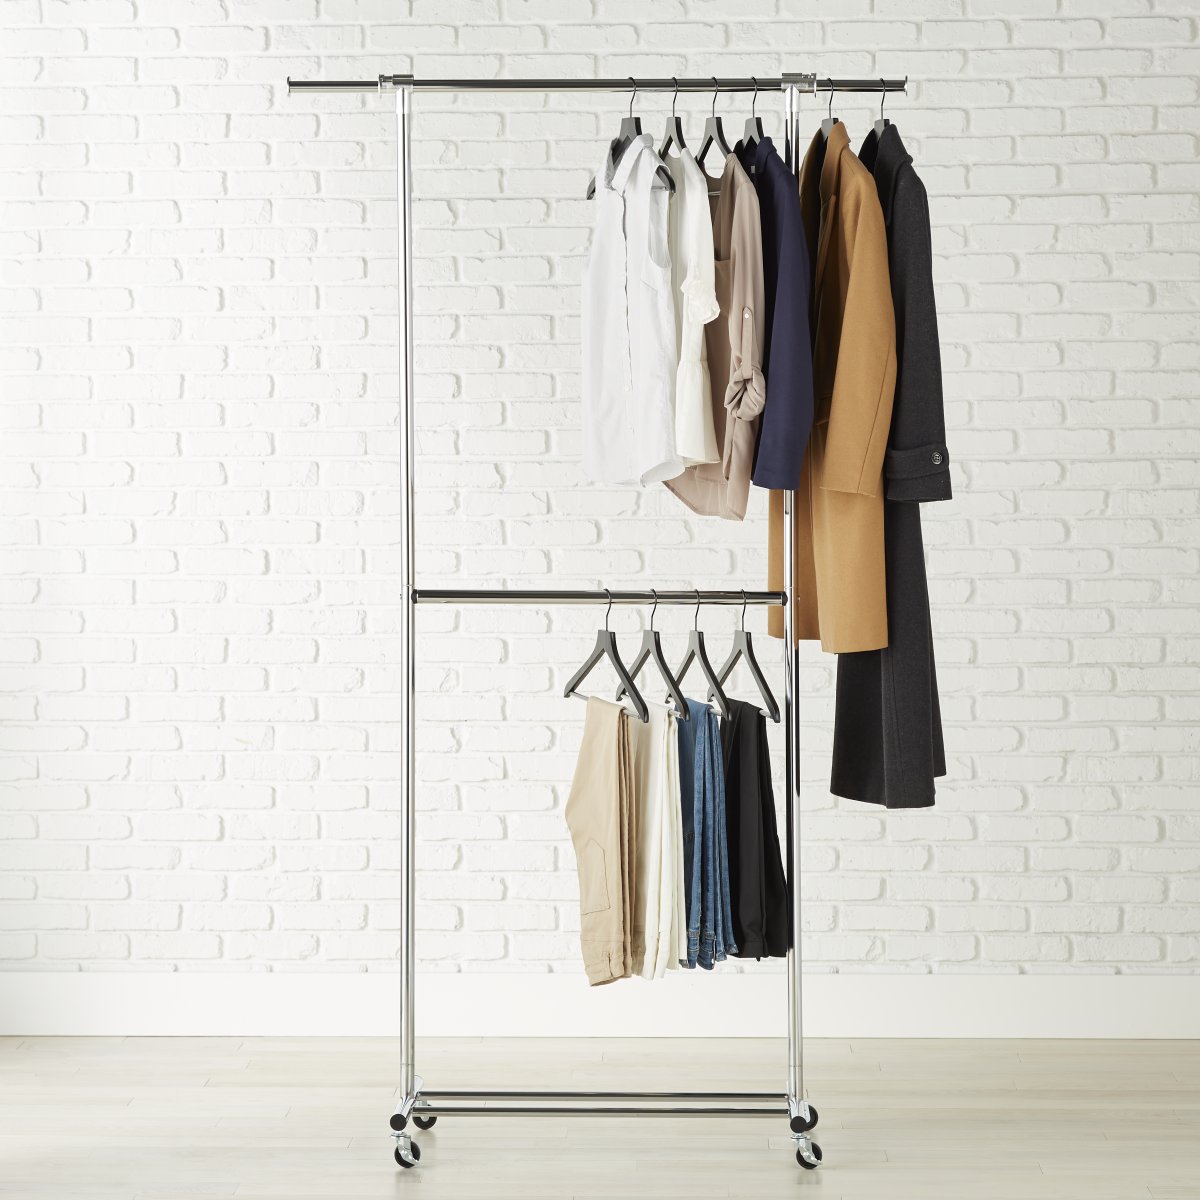 Double Clothes Rail Rack Wardrobe Stand Storage Dress Shirt Portable Adjustable 